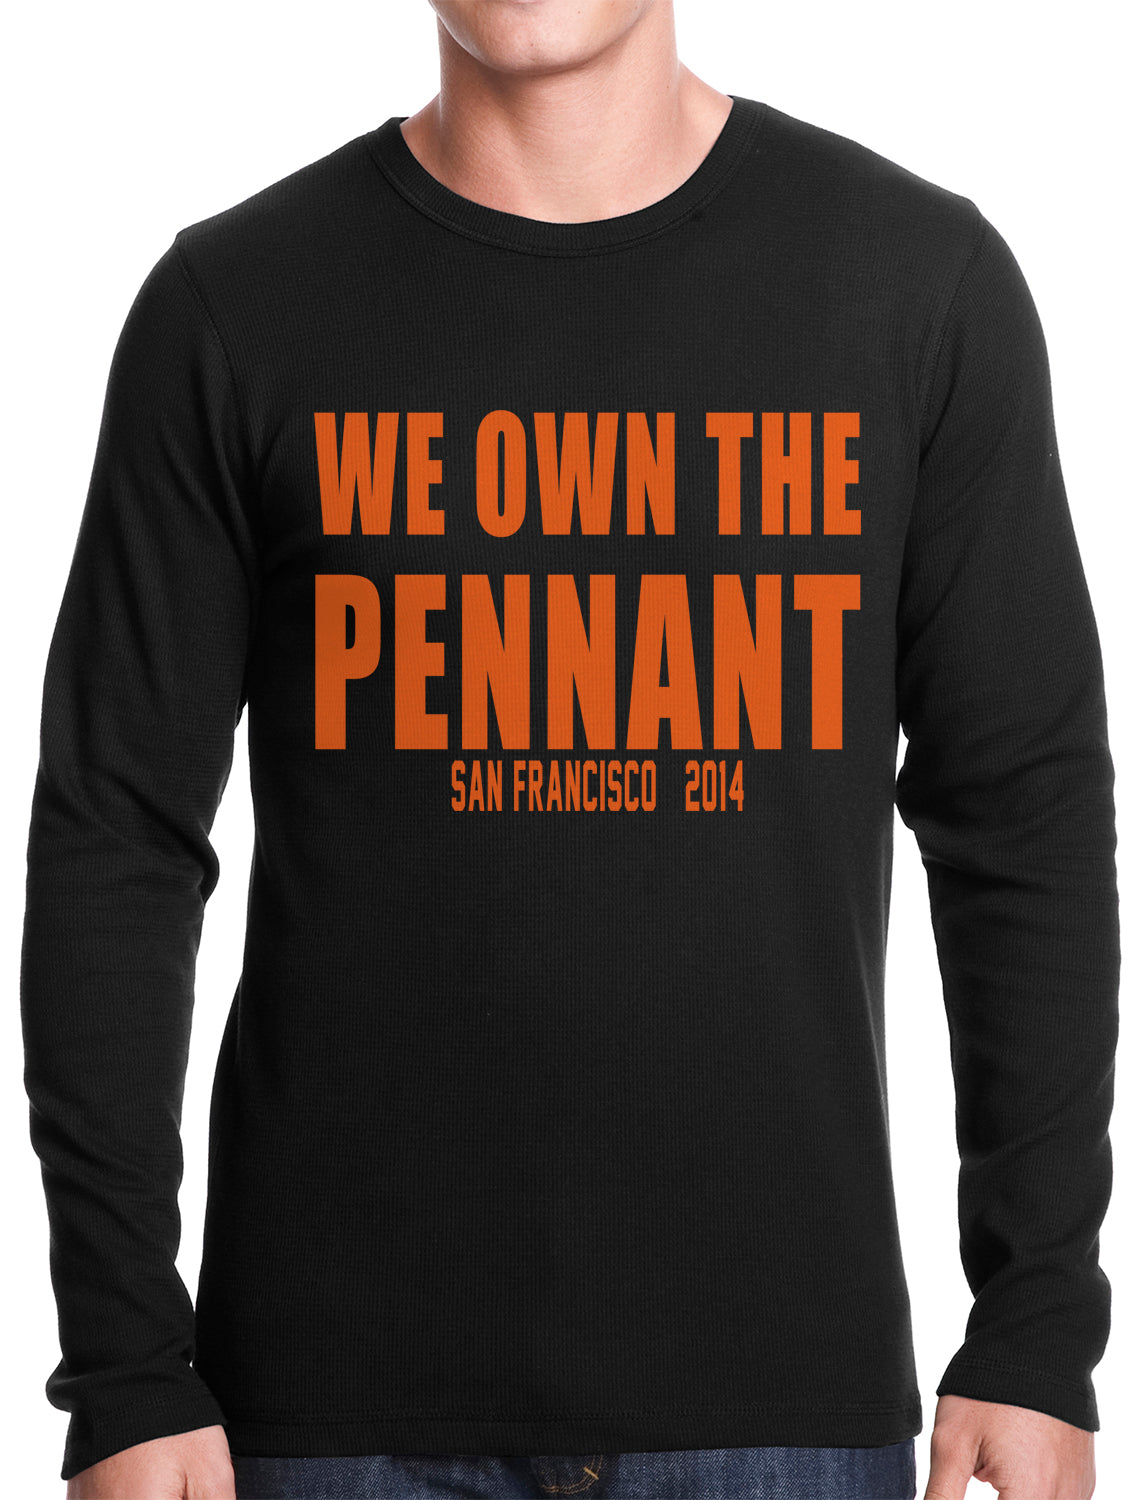 We Own The Pennant San Francisco Thermal Shirt